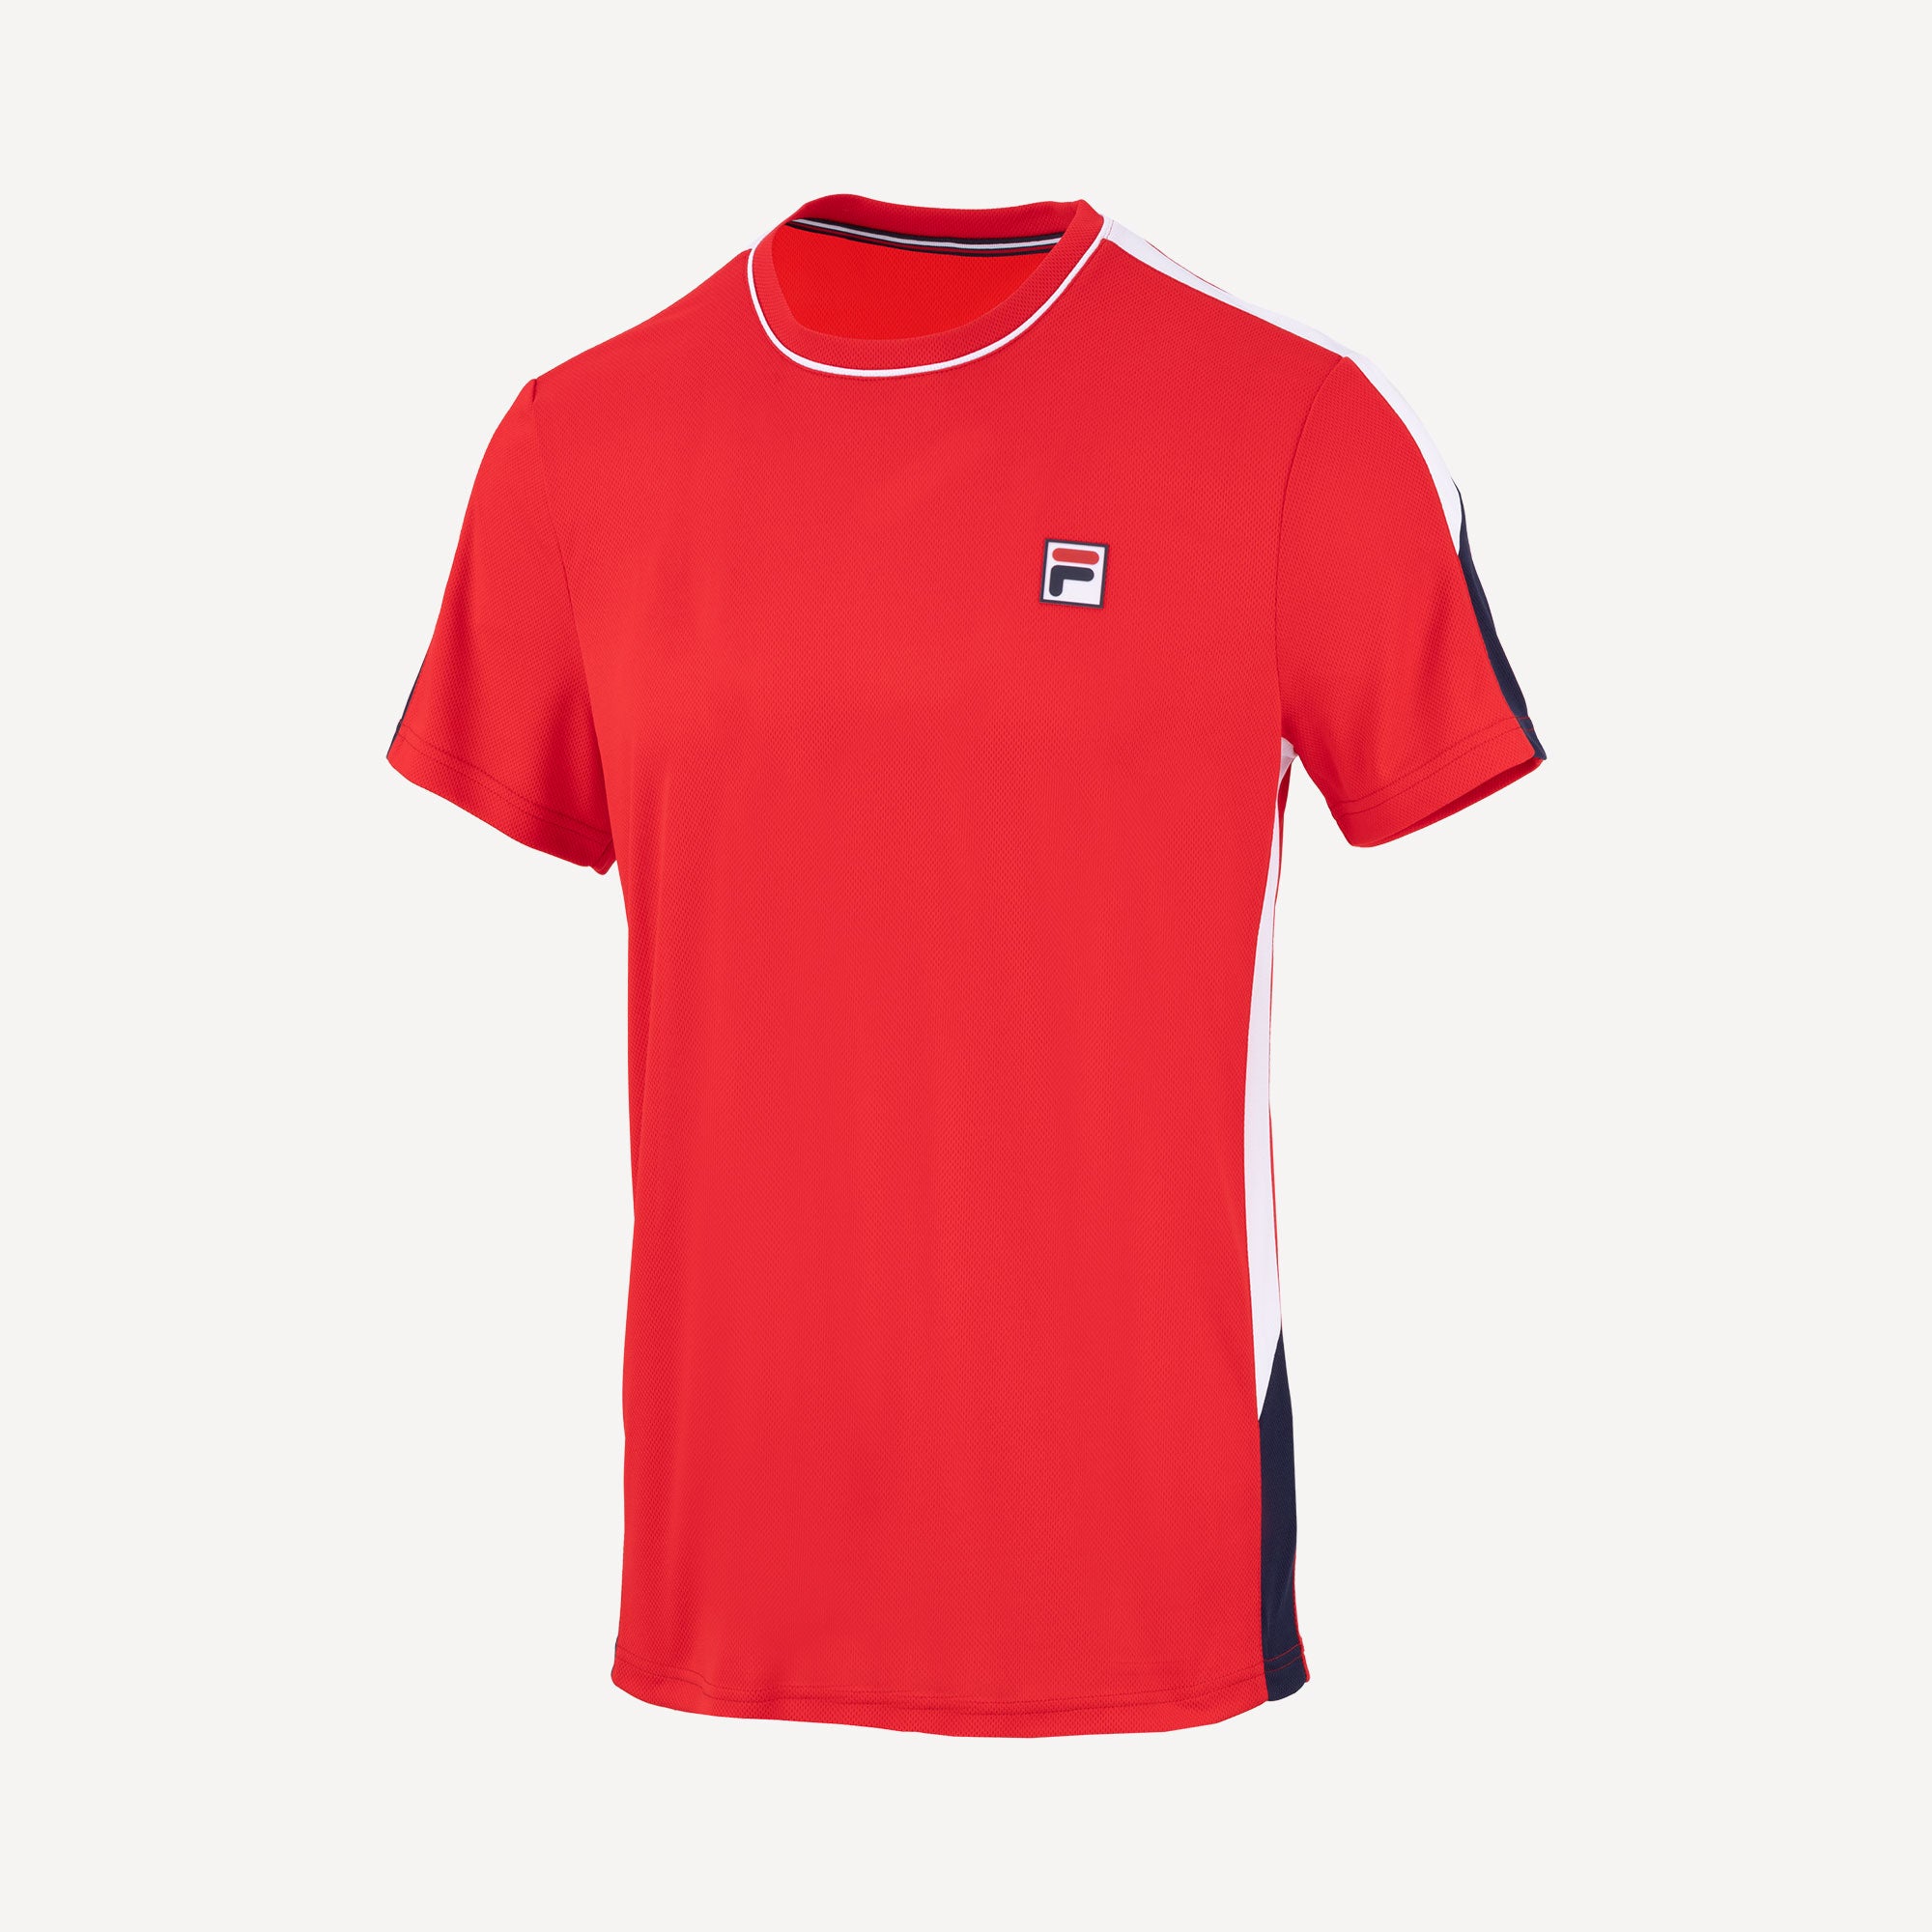 Fila Gabriel Men's Tennis Shirt - Red (1)